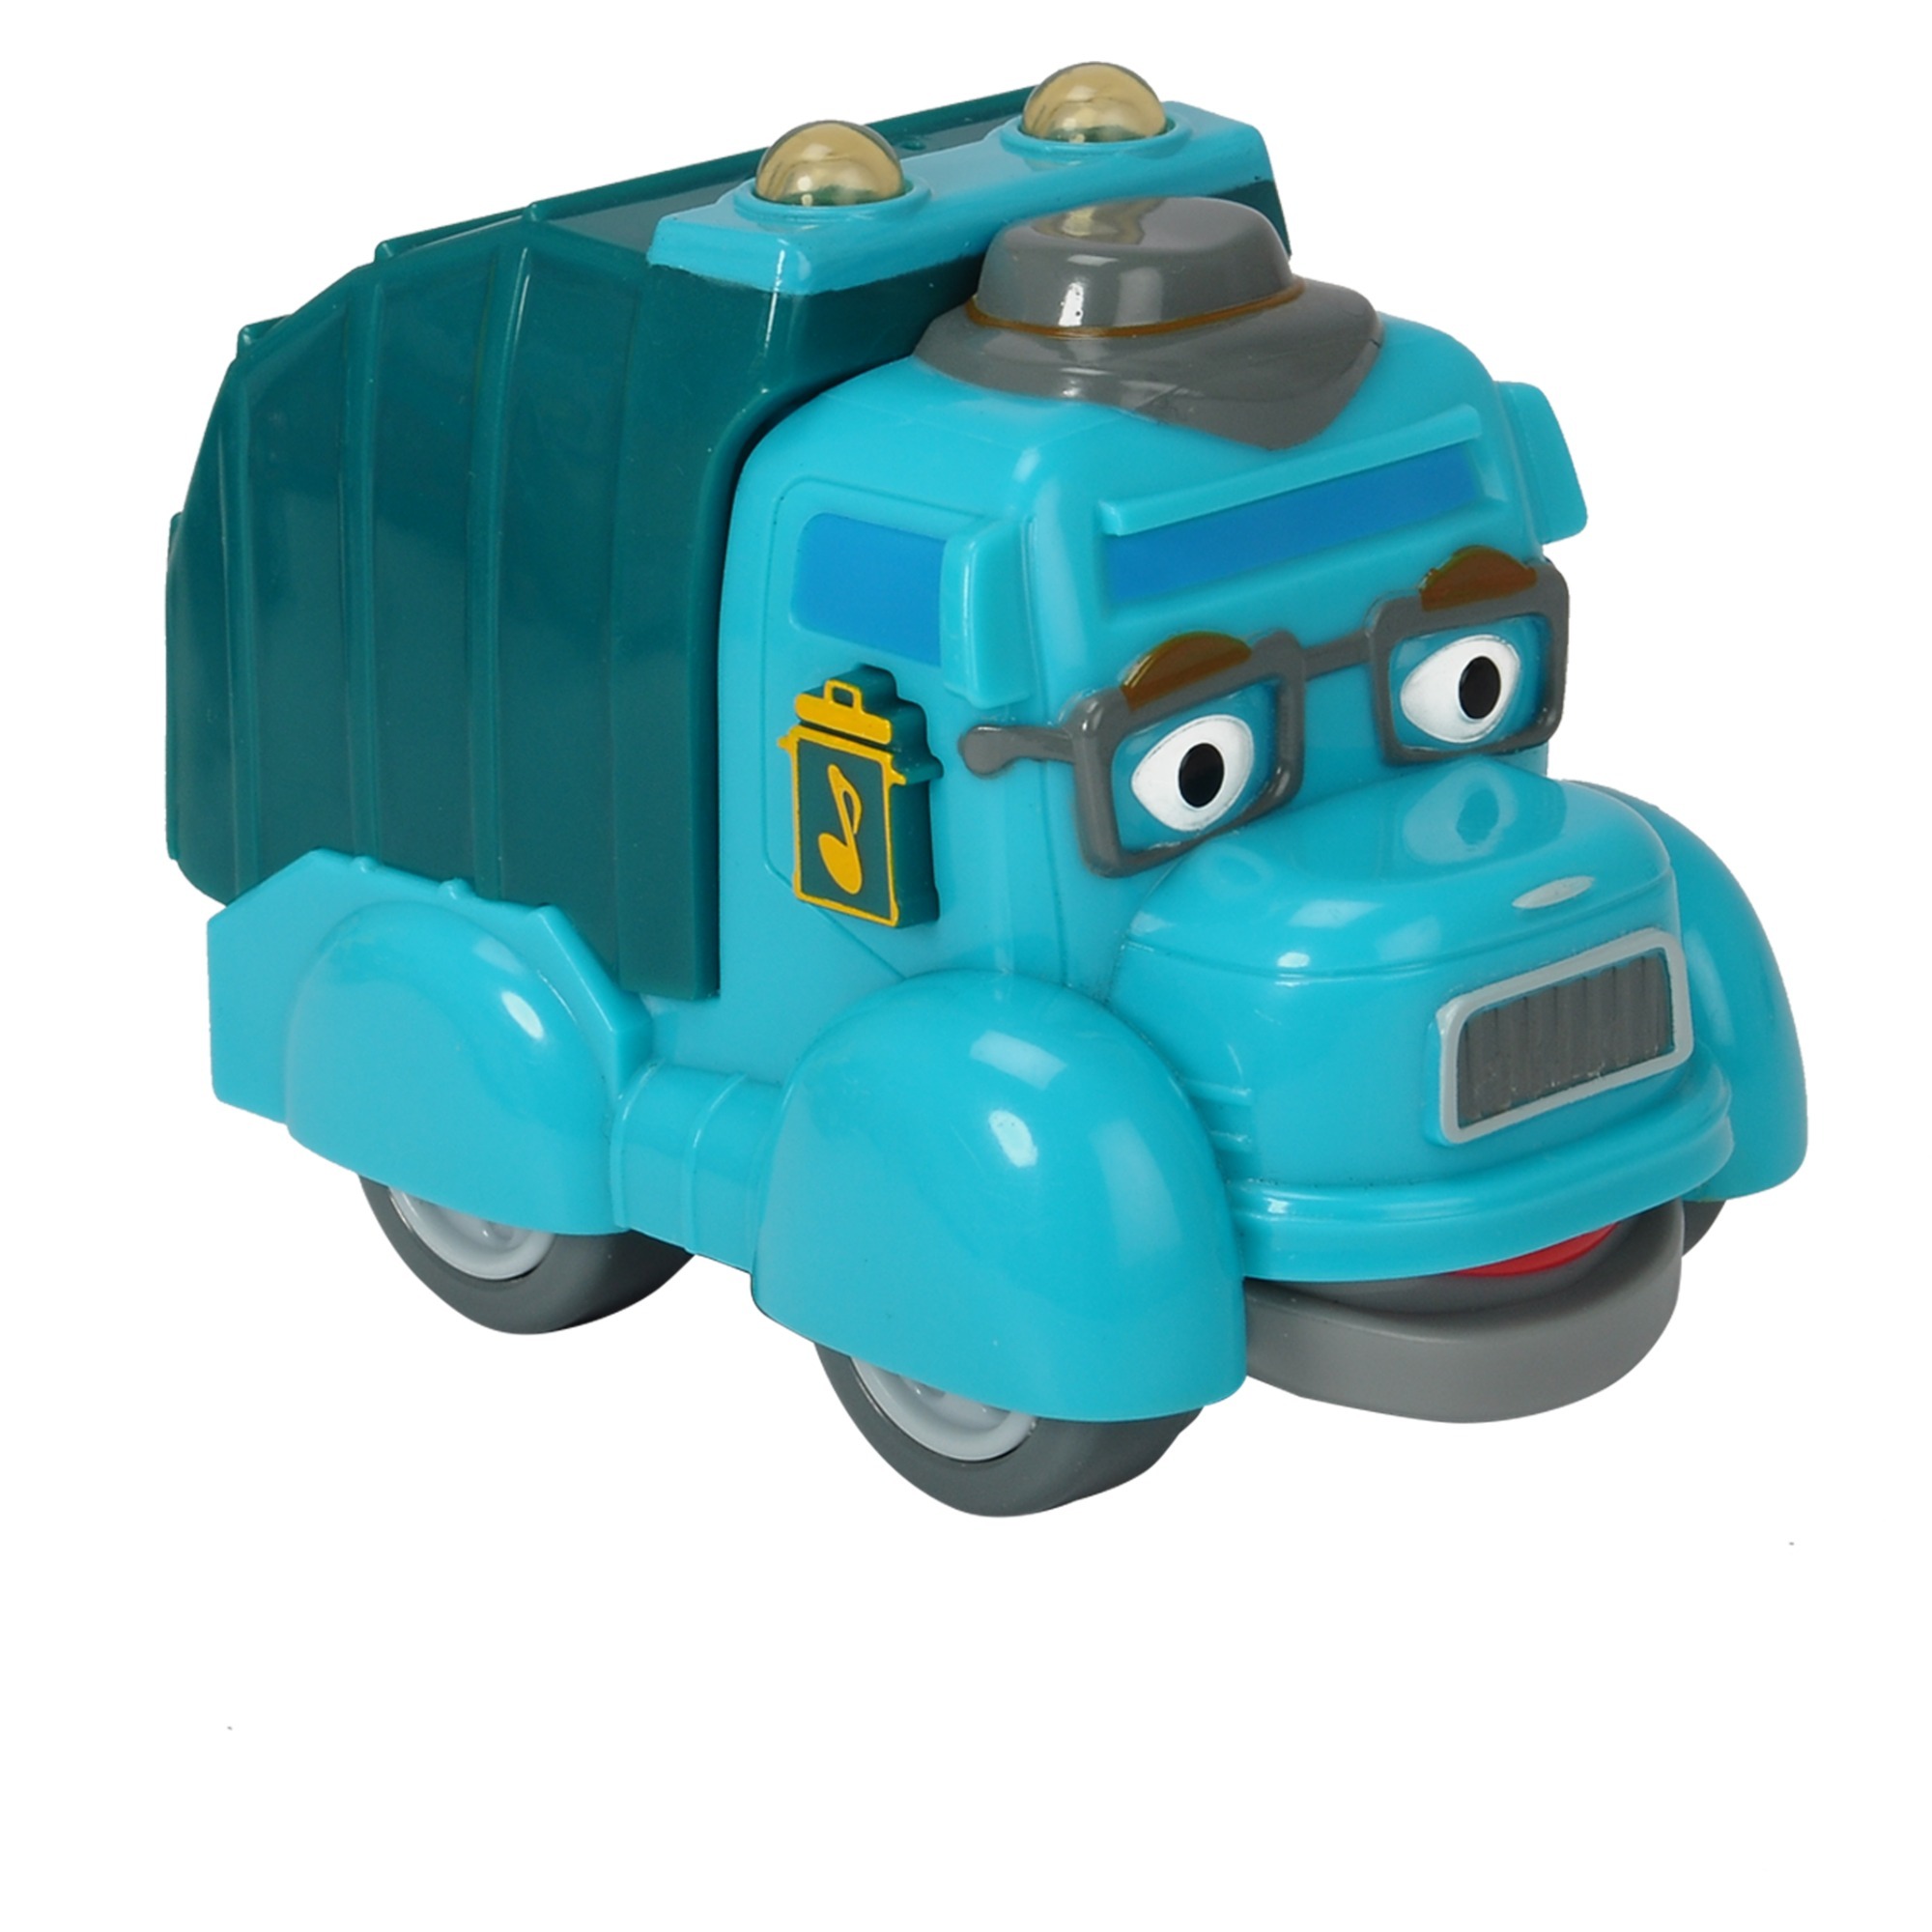 203121002, Toy vehicle